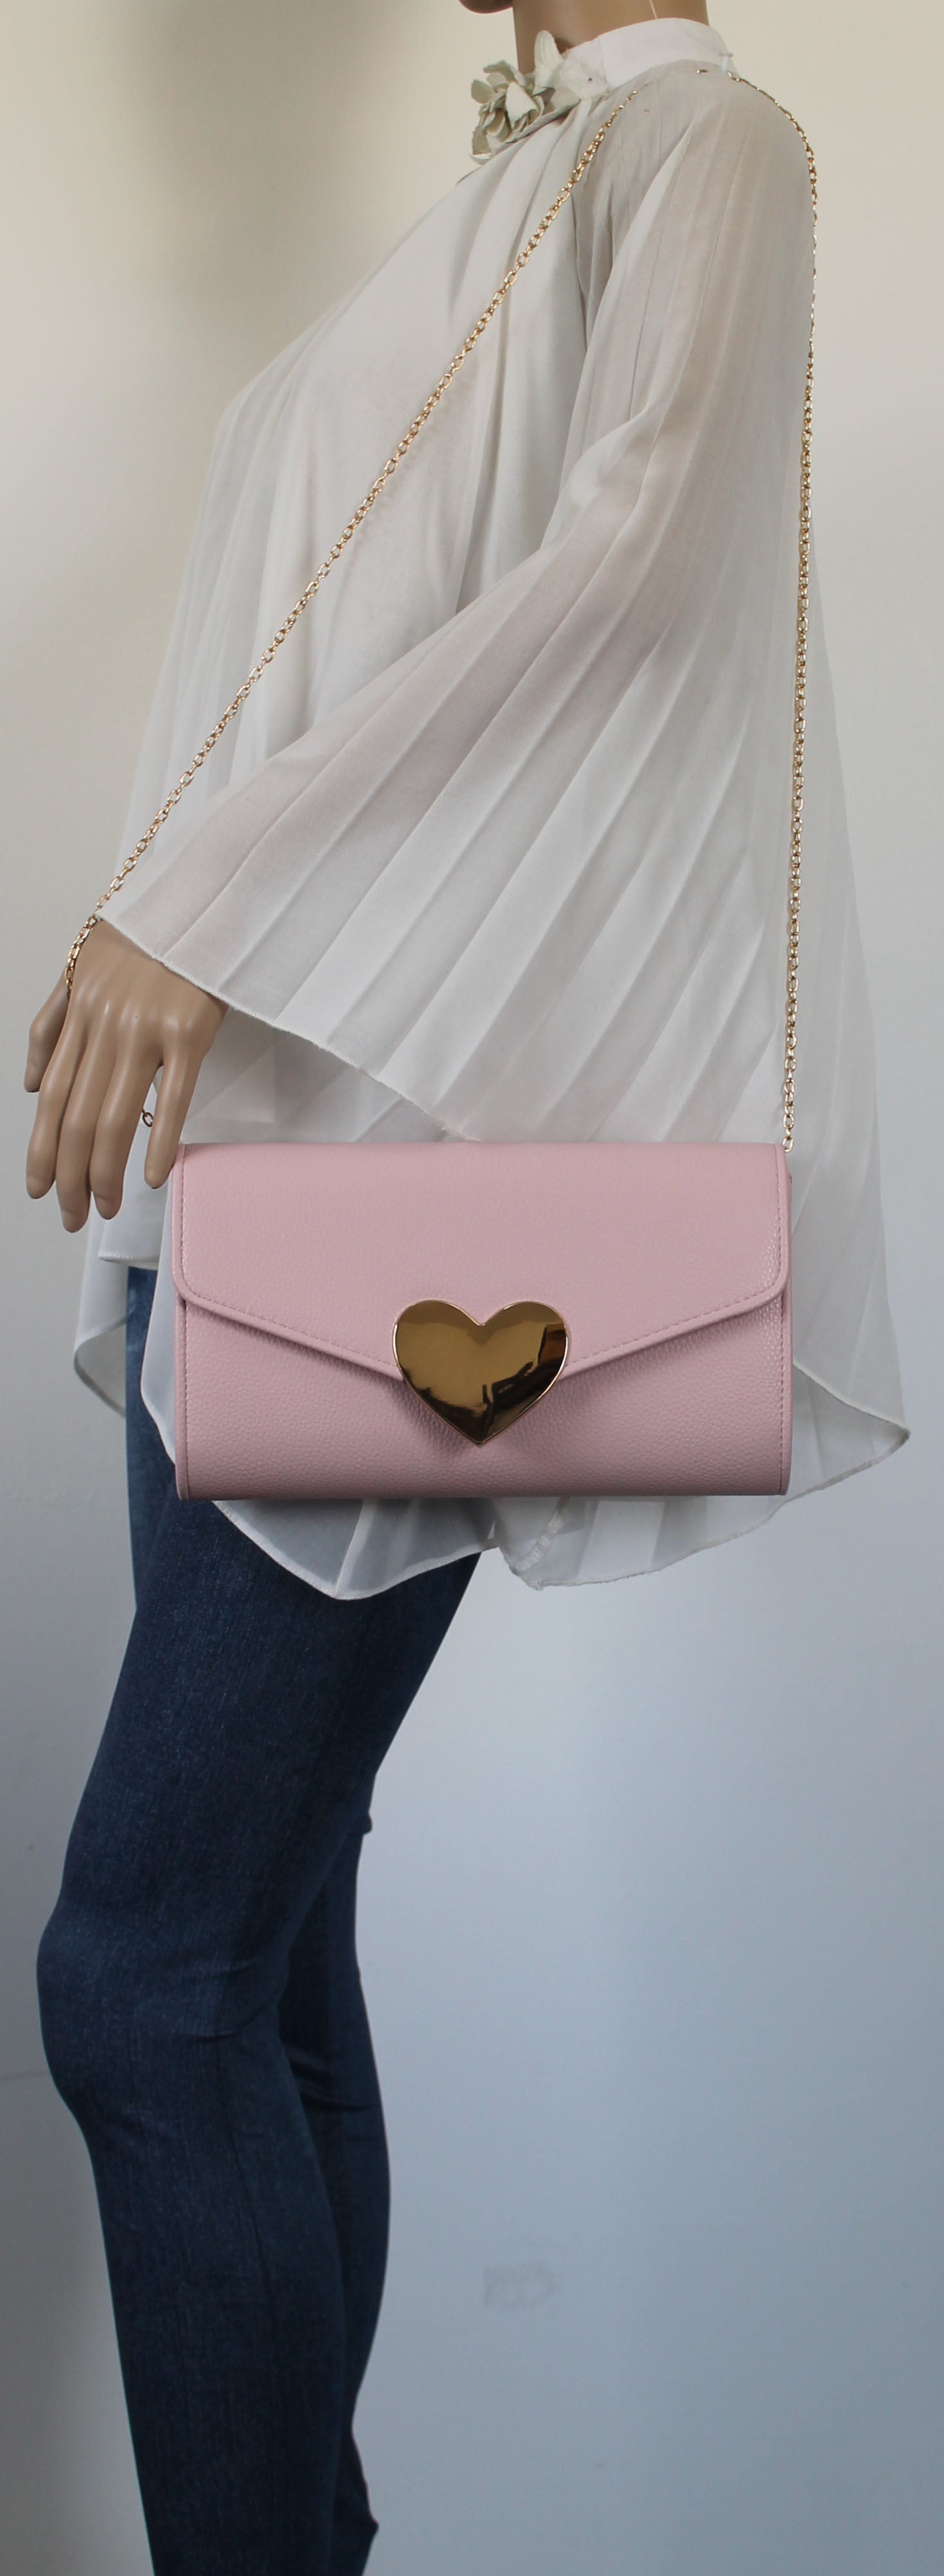 SWANKYSWANS Corrie Heart Clutch Bag Pink Cute Cheap Clutch Bag For Weddings School and Work